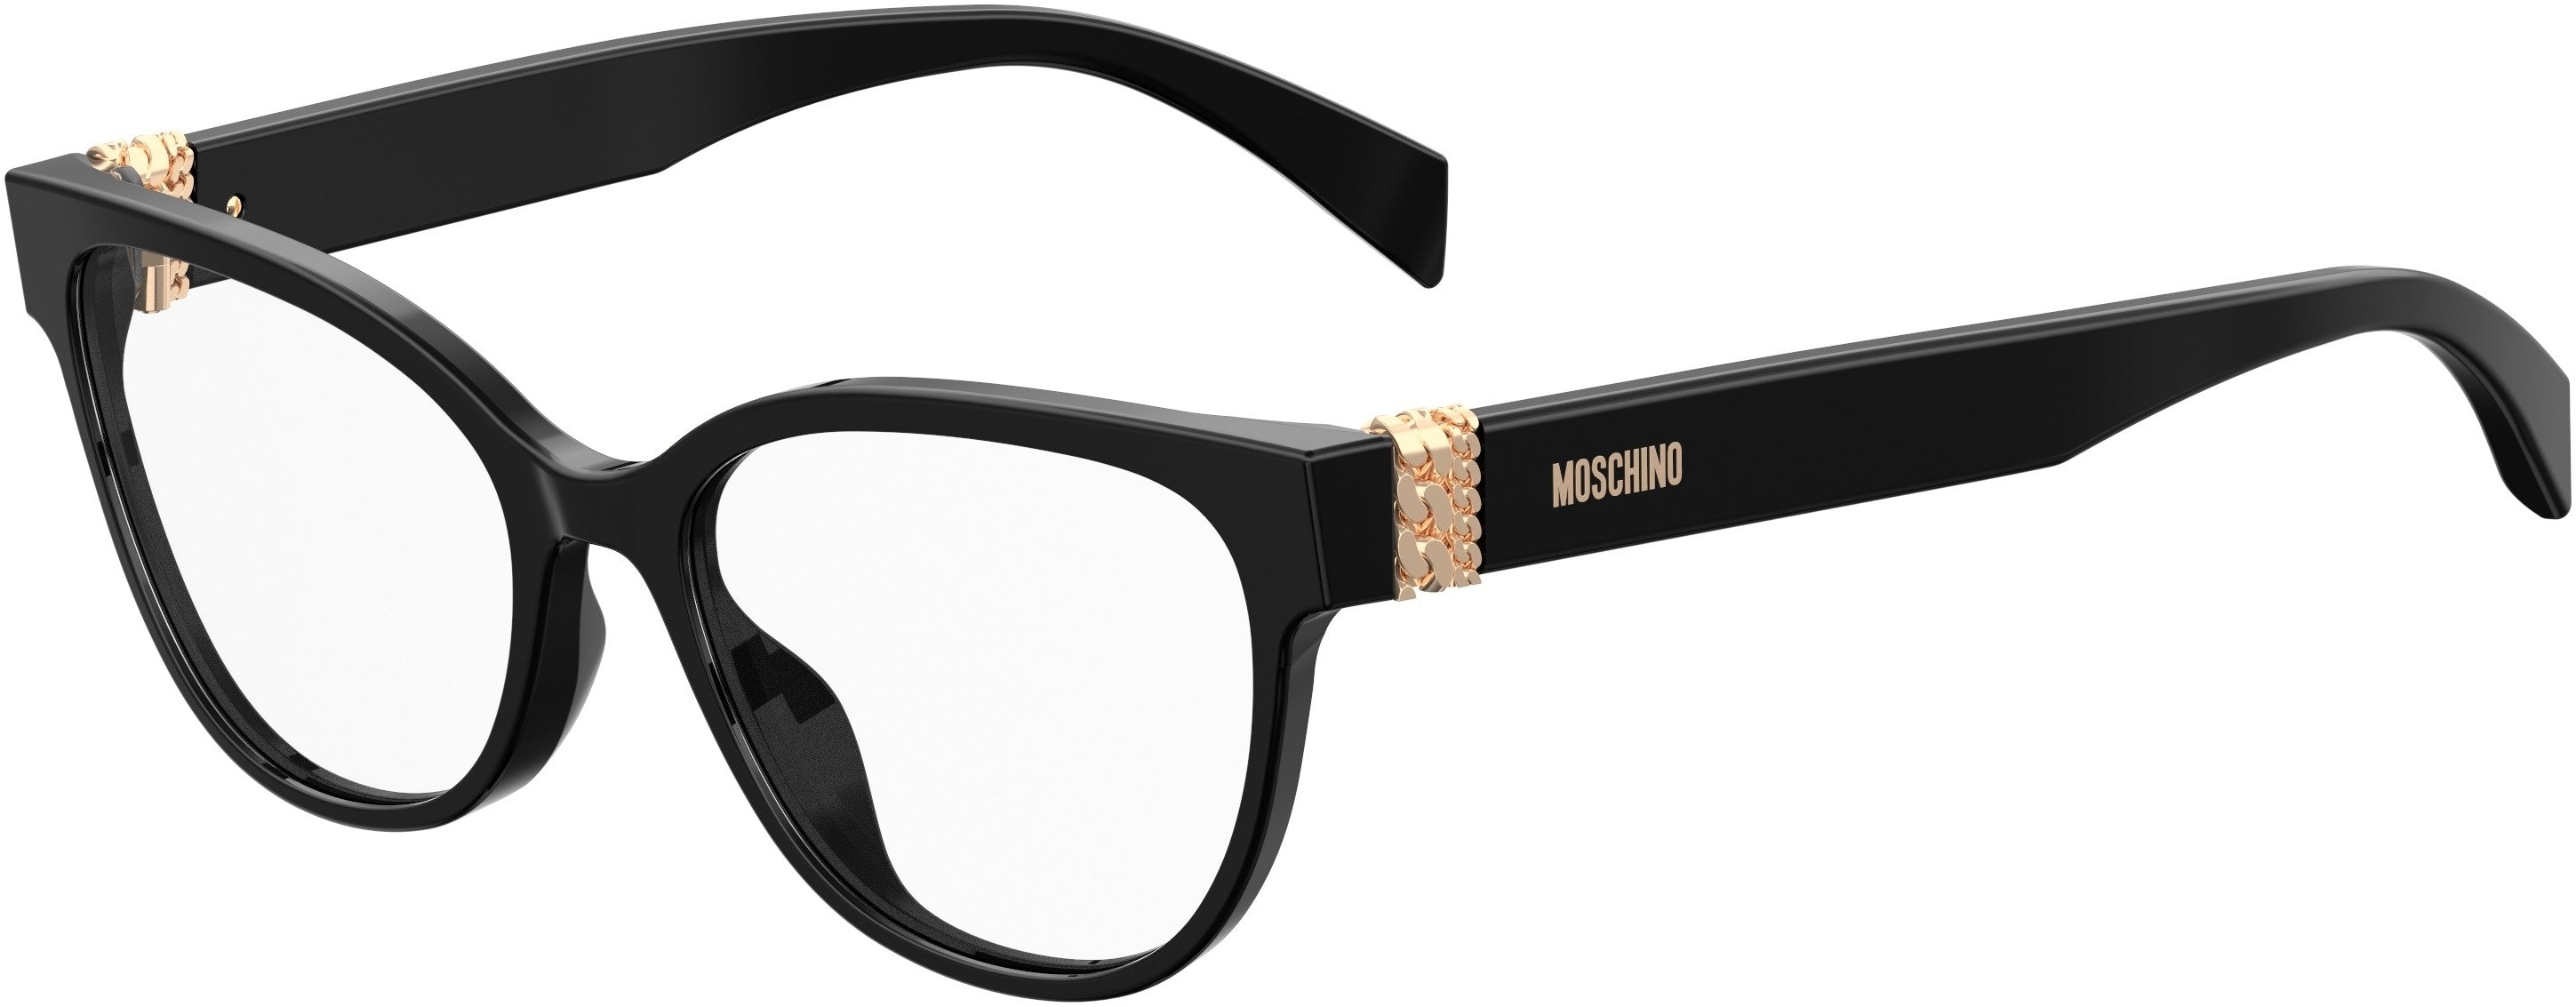  Moschino 509 Oval Modified Eyeglasses 0807-0807  Black (00 Demo Lens)